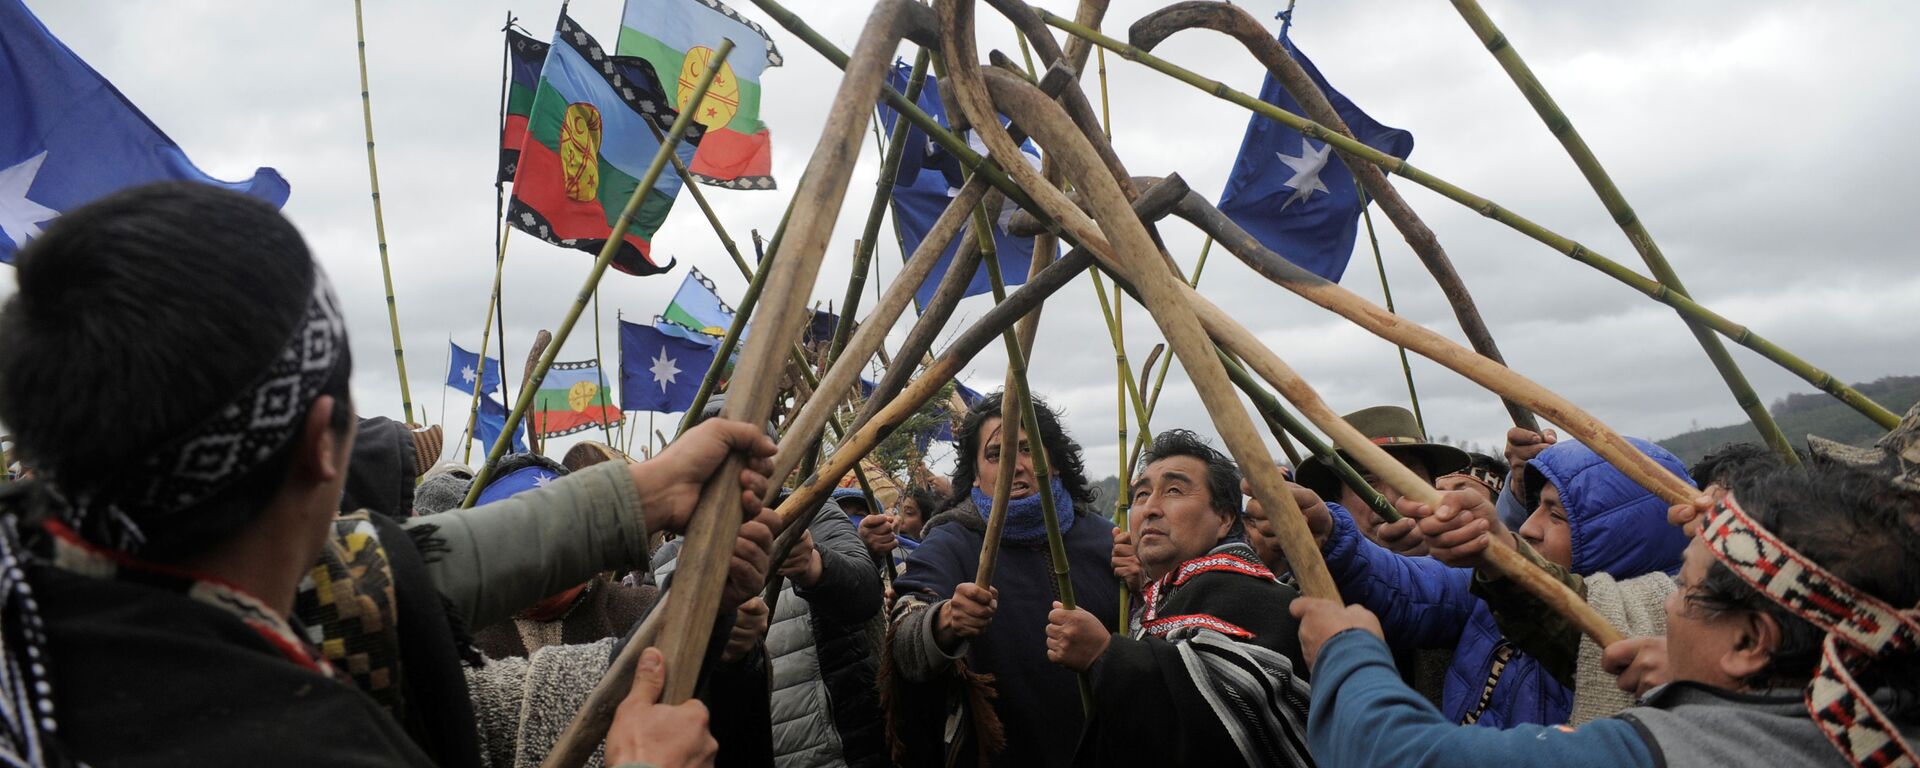 Protesta de la comunidad mapuche en Chile - Sputnik Mundo, 1920, 18.08.2020